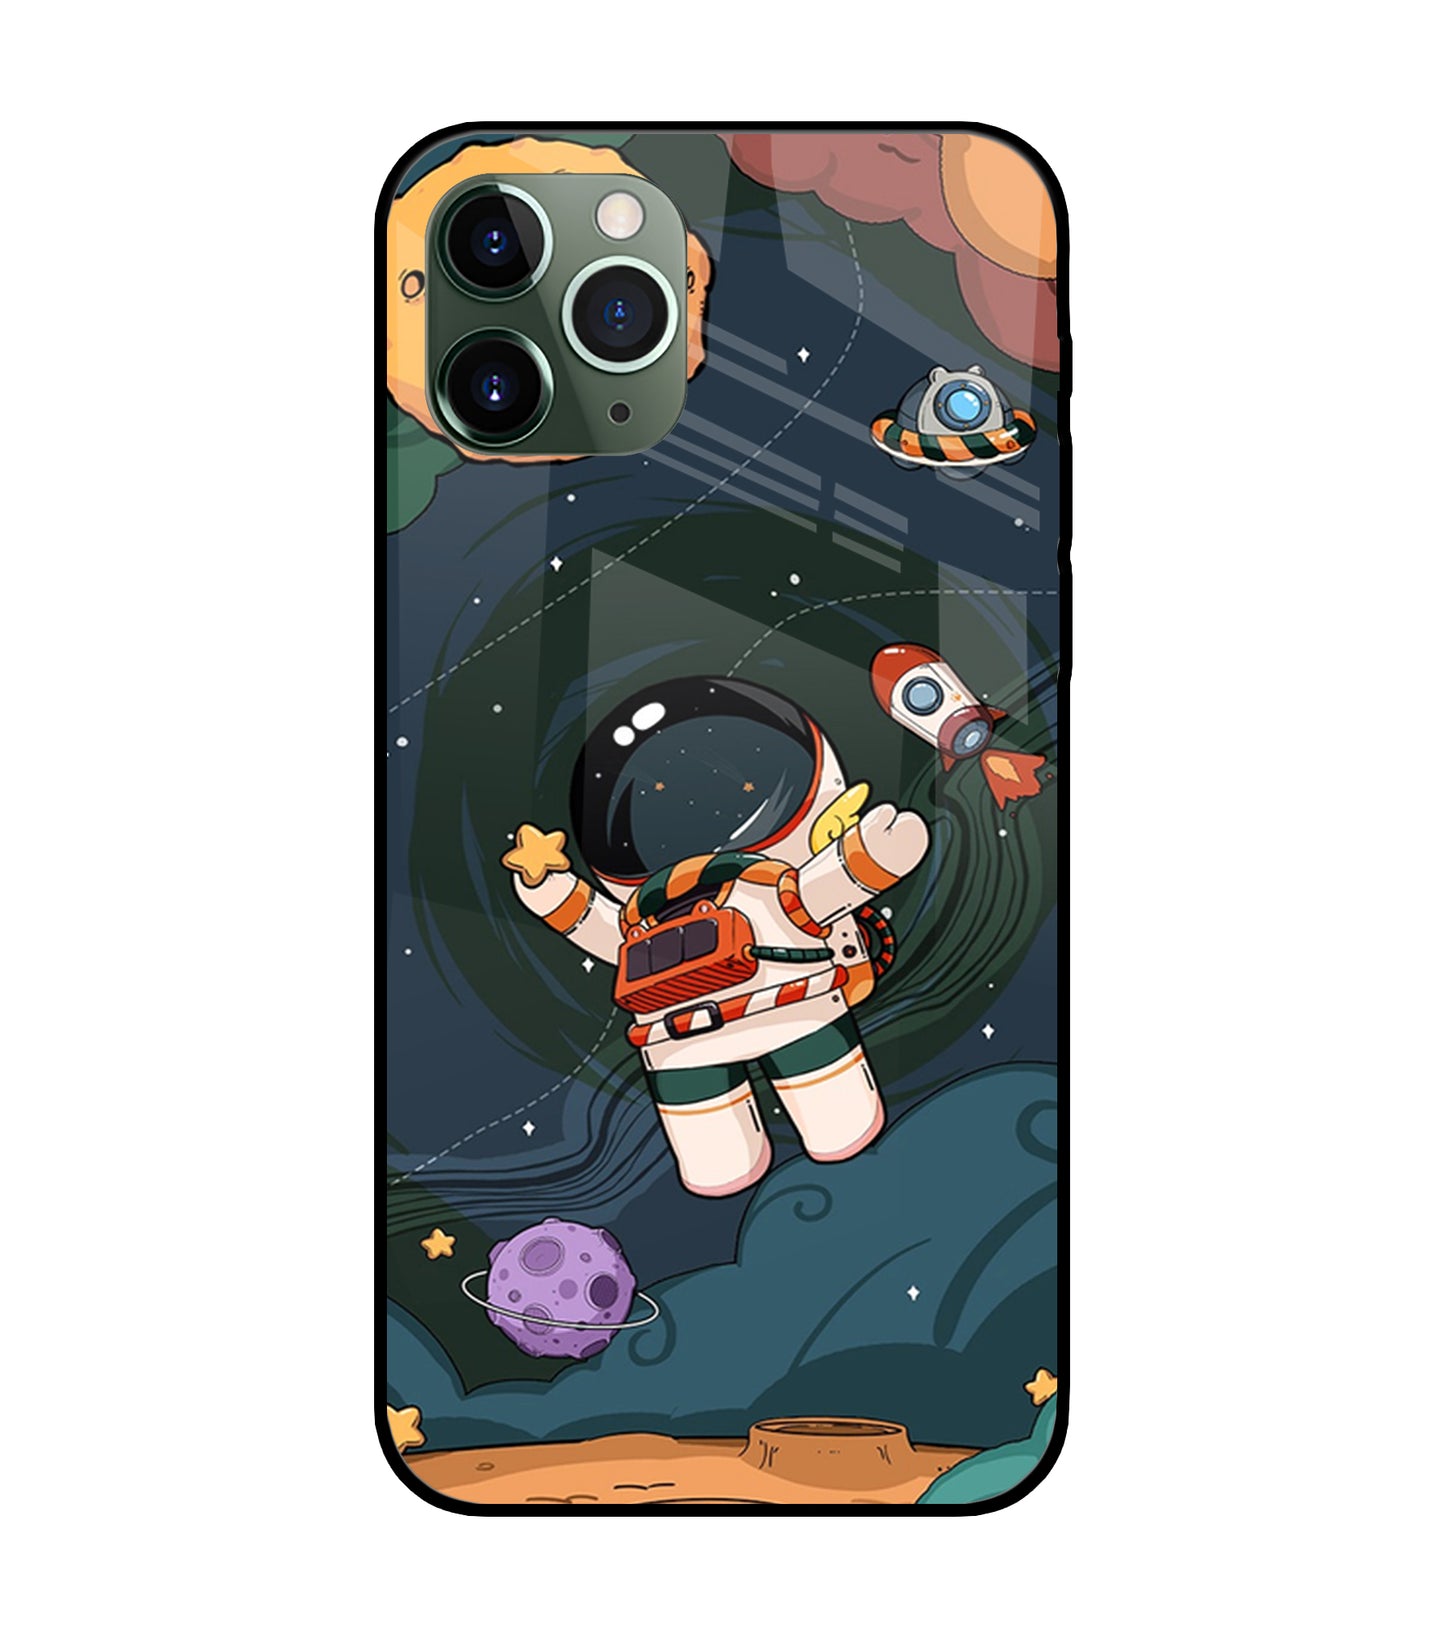 Cartoon Astronaut iPhone 11 Pro Max Glass Cover